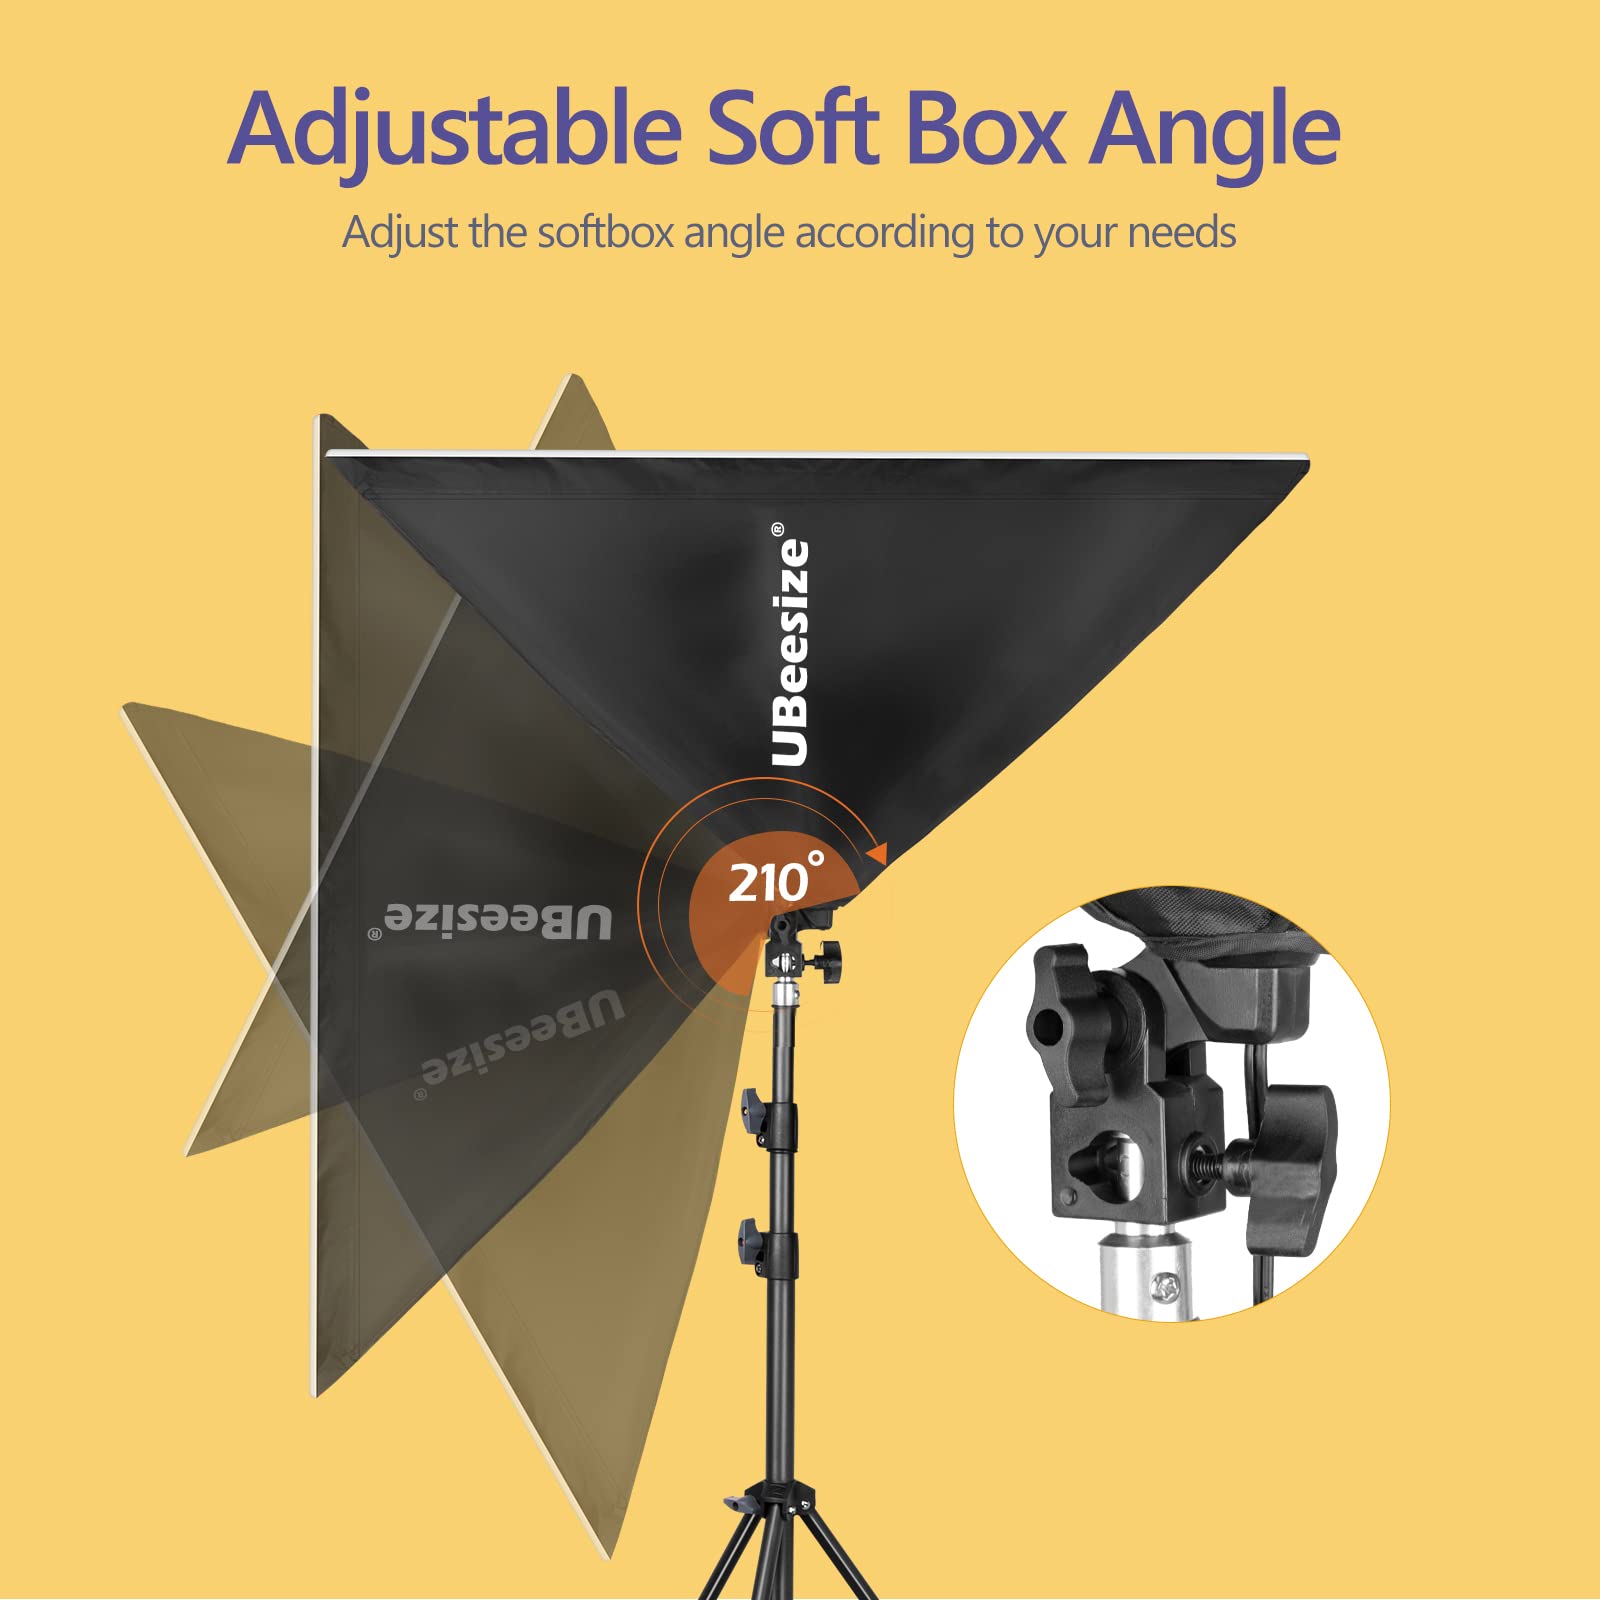 UBeesize Softbox Photography Lighting Kit, 27” x 20” Continuous Lighting Kit with 2pcs 40W E27 Socket 8000K Bulbs, Professional Photo Studio Lighting for Video Recording, Portrait Shooting